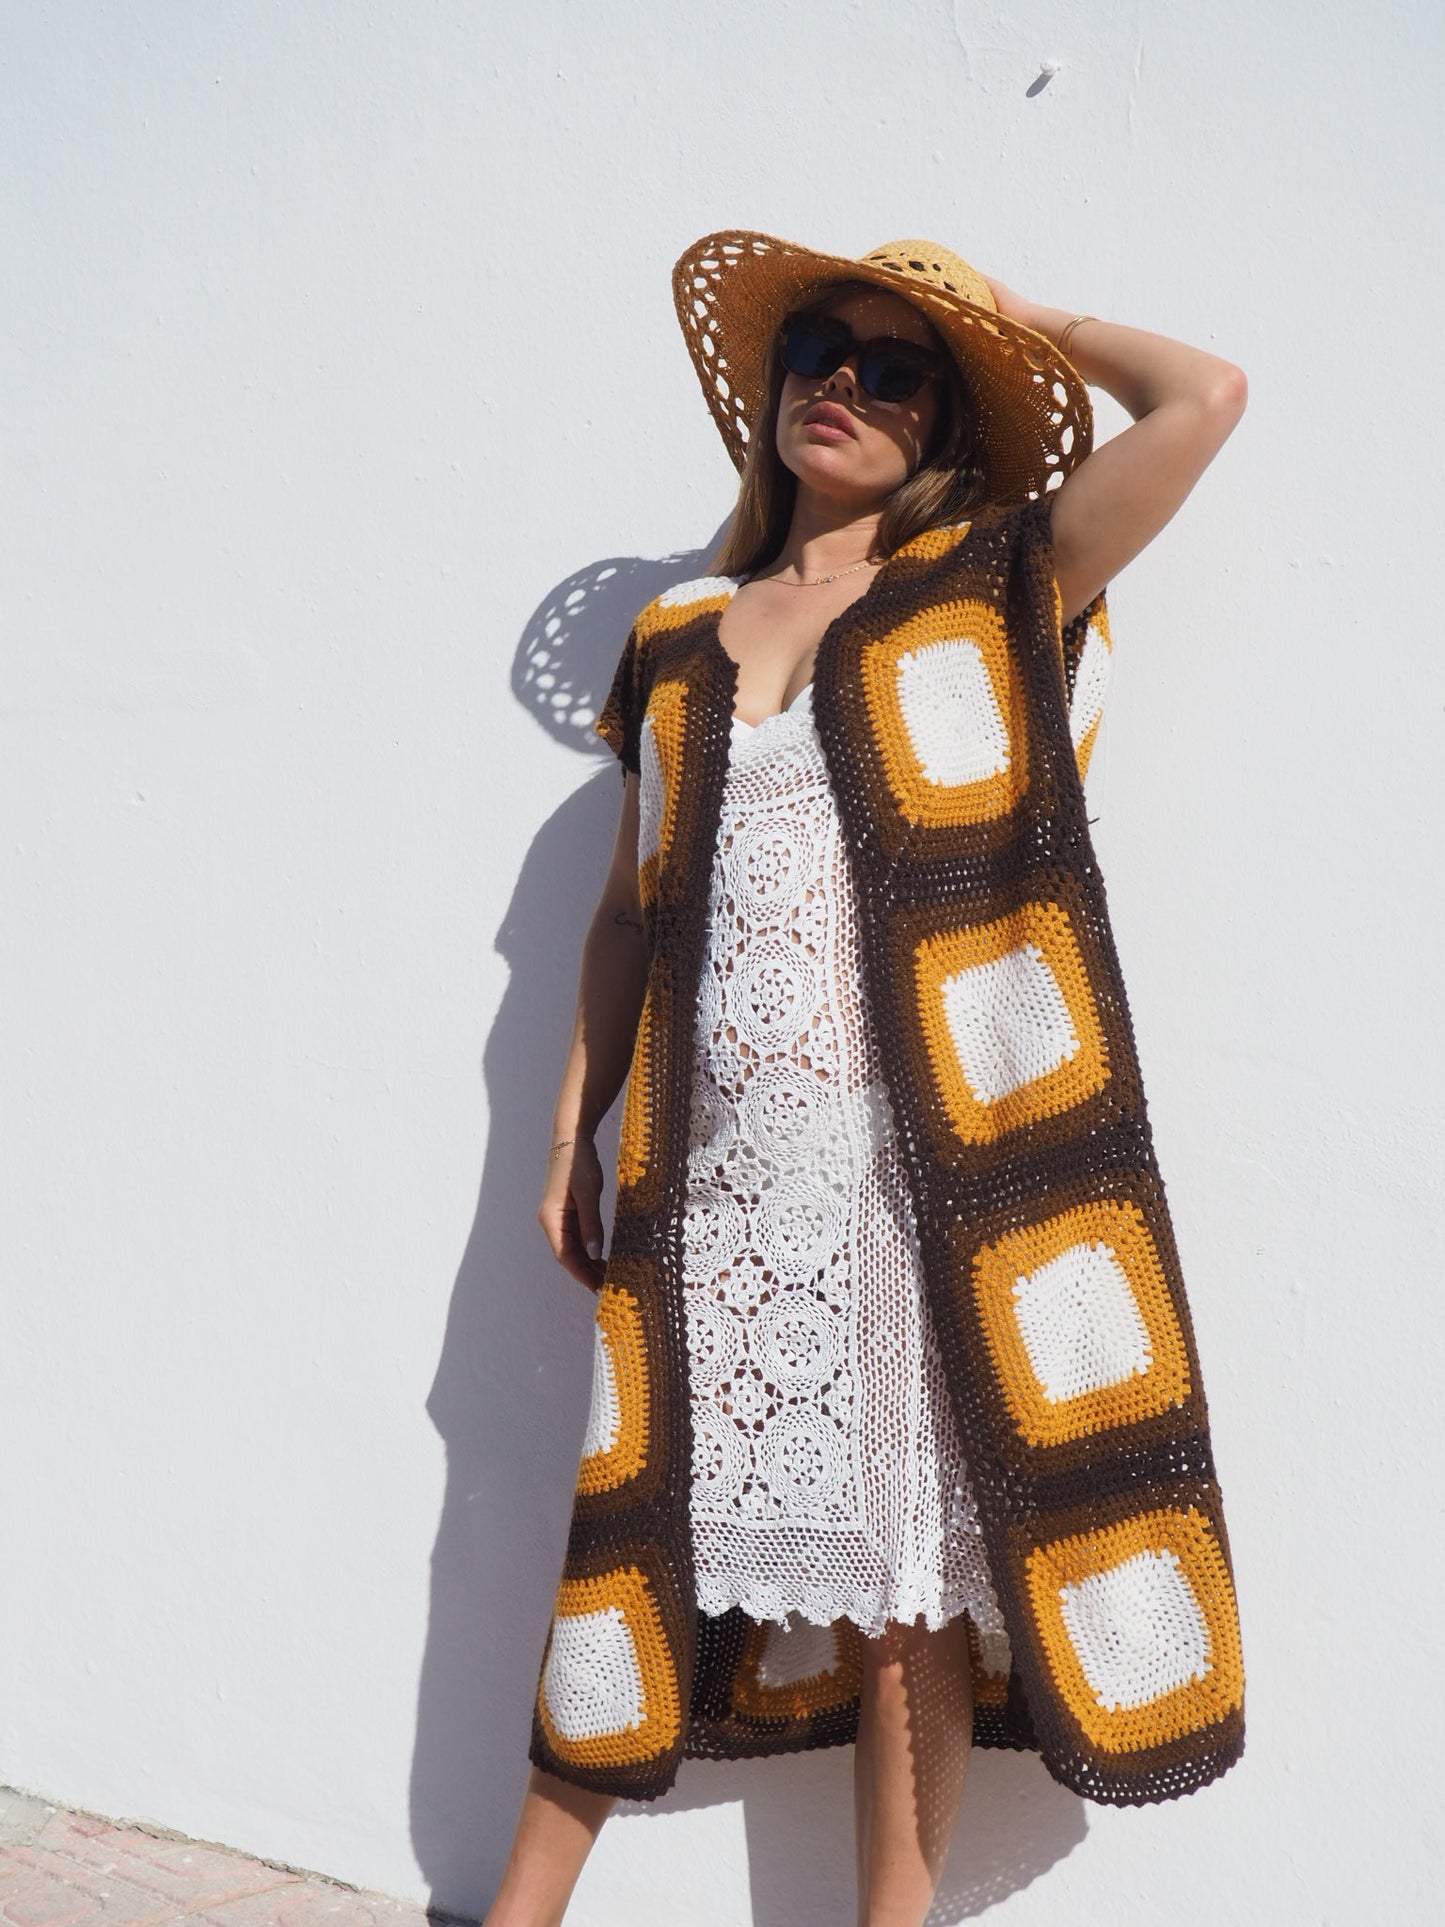 Vintage crochet cotton beach dress handmade cotton crochet up-cycled by Vagabond Ibiza